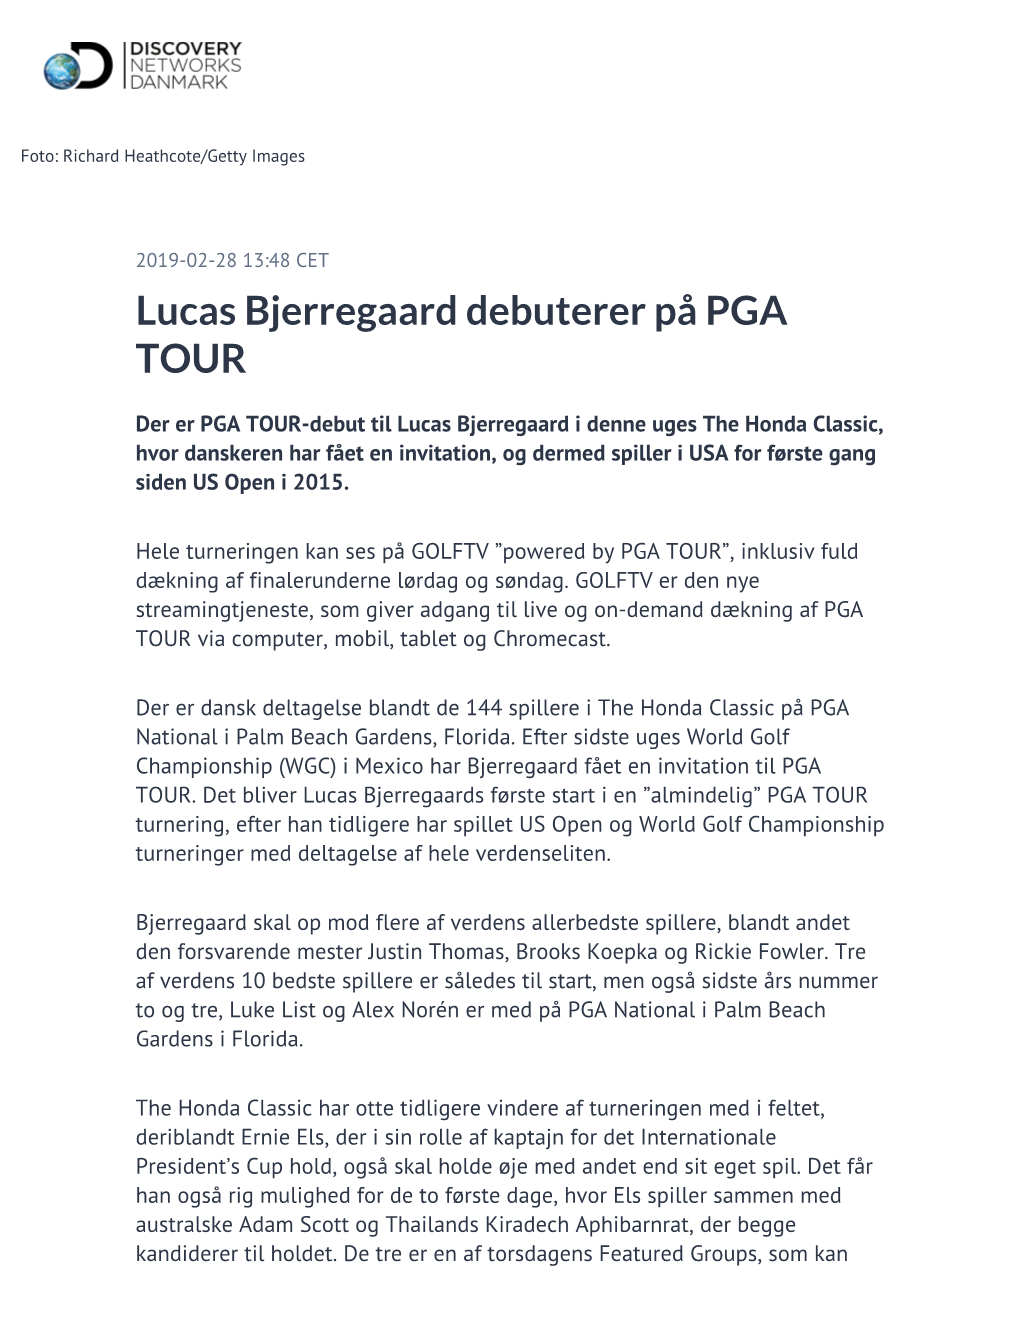 Lucas Bjerregaard Debuterer På PGA TOUR